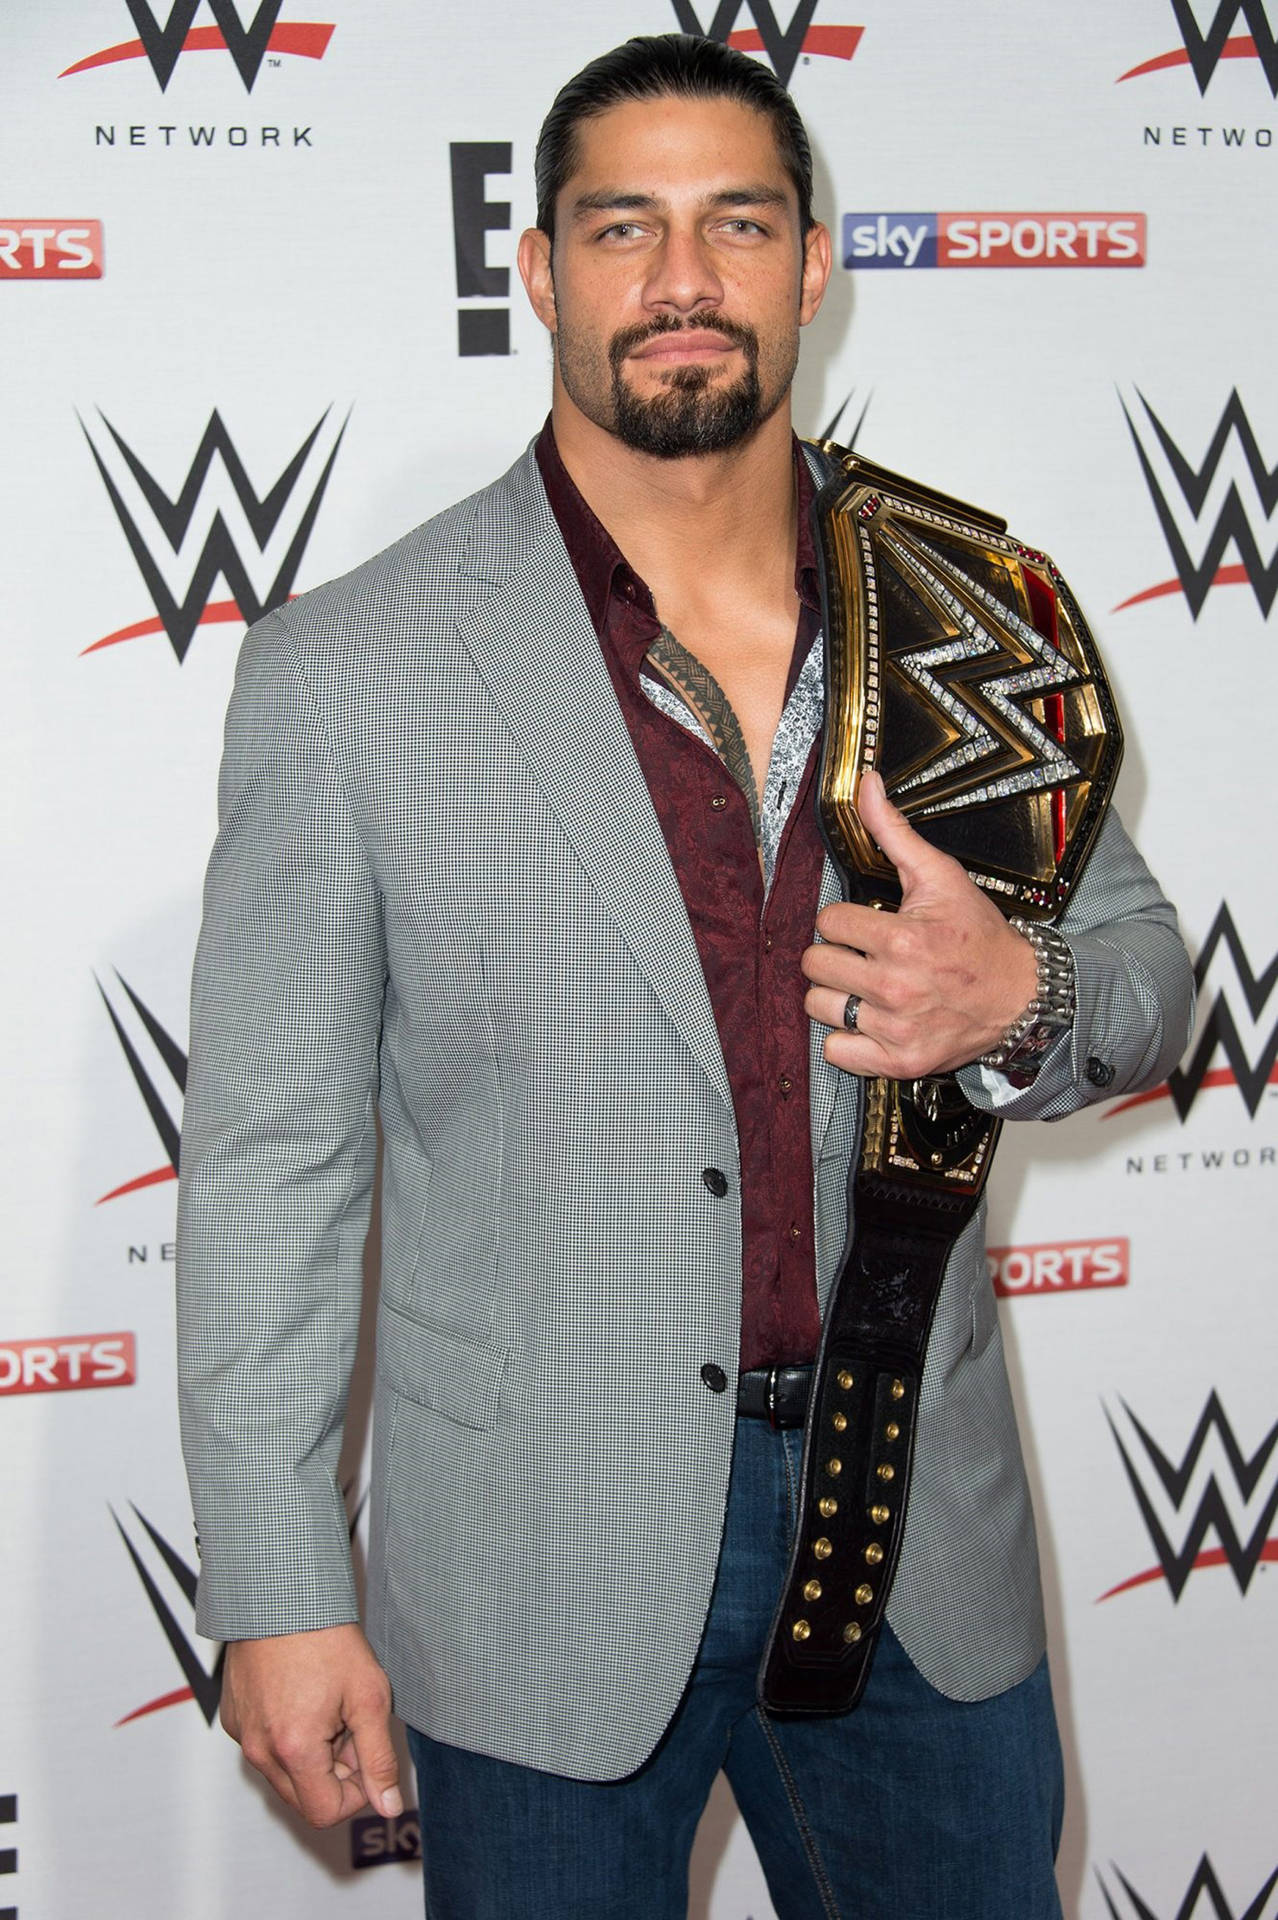 Wwe Superstar Roman Reigns On Raw Red Carpet